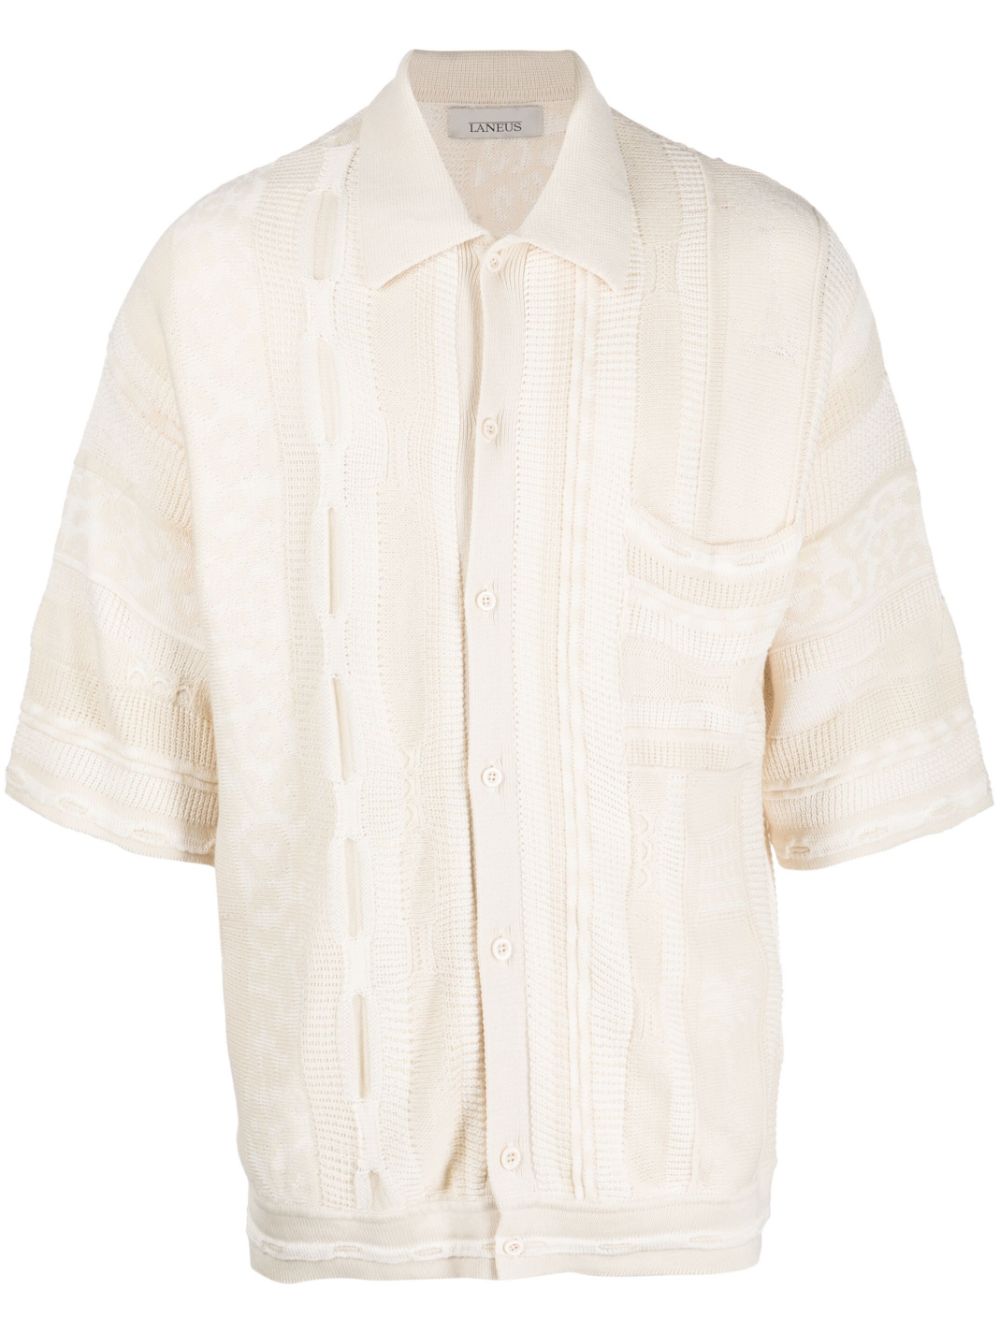 Laneus Pattern Jacquard Knit Shirt - Farfetch